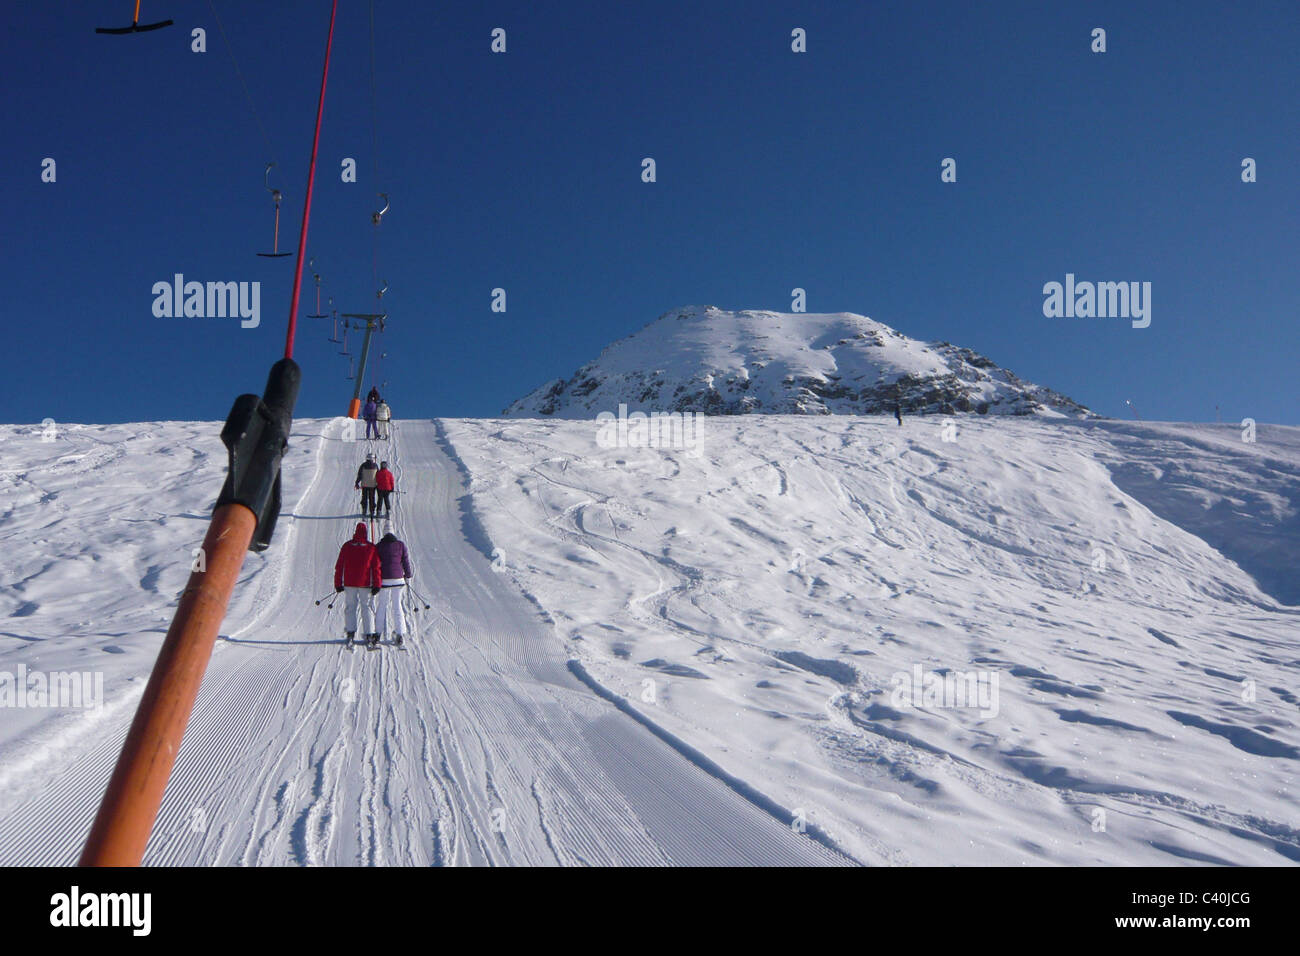 Austria, Lech, ski lift, hanger elevator, skiing area, winter, snow Stock Photo